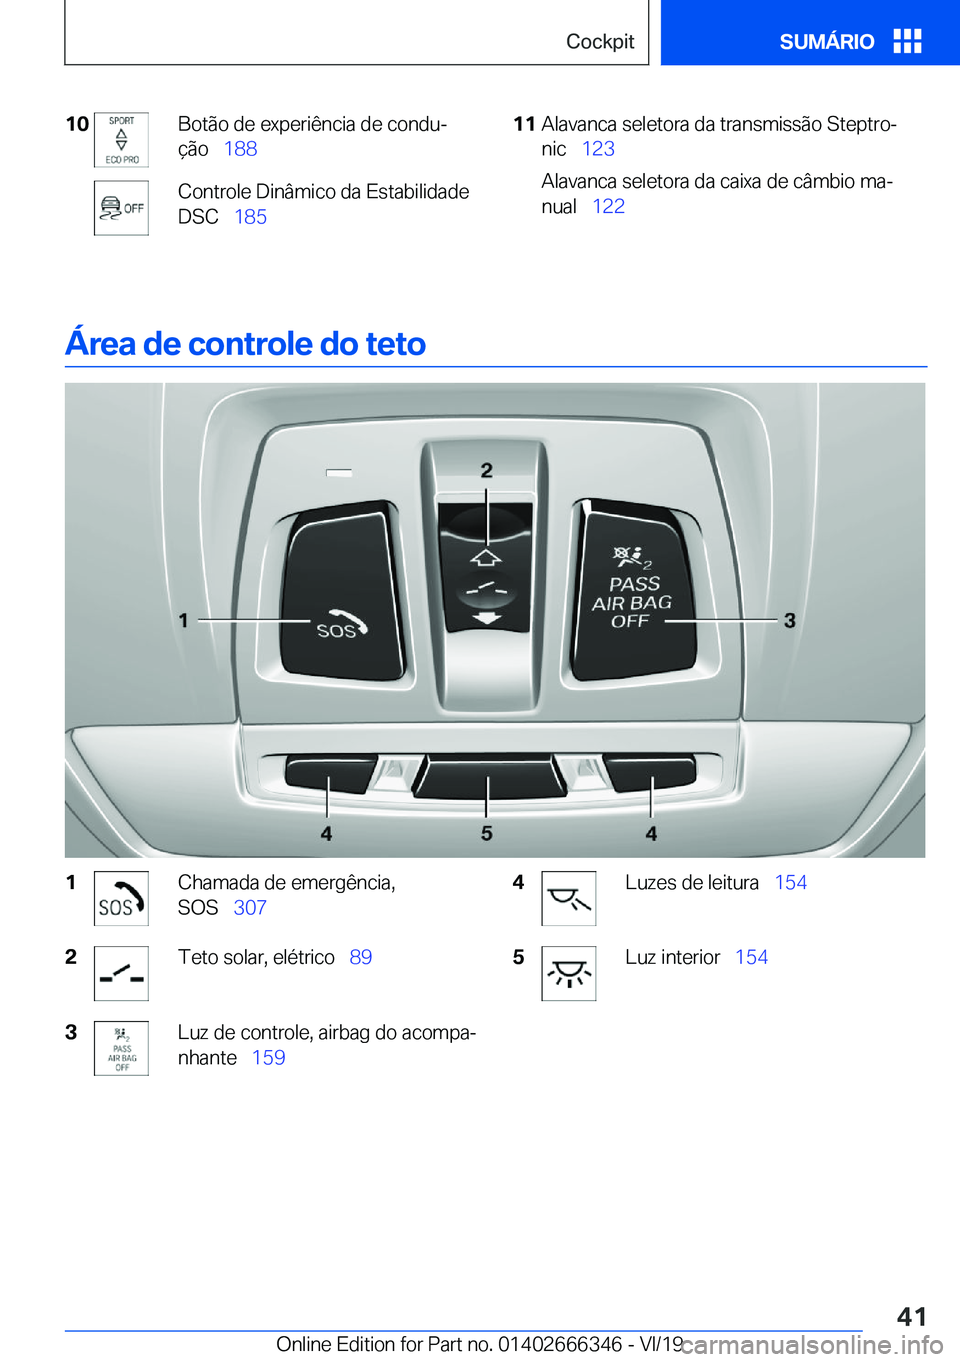 BMW 4 SERIES COUPE 2020  Manual do condutor (in Portuguese) �1�0�B�o�t�ã�o��d�e��e�x�p�e�r�i�ê�n�c�i�a��d�e��c�o�n�d�uª
�